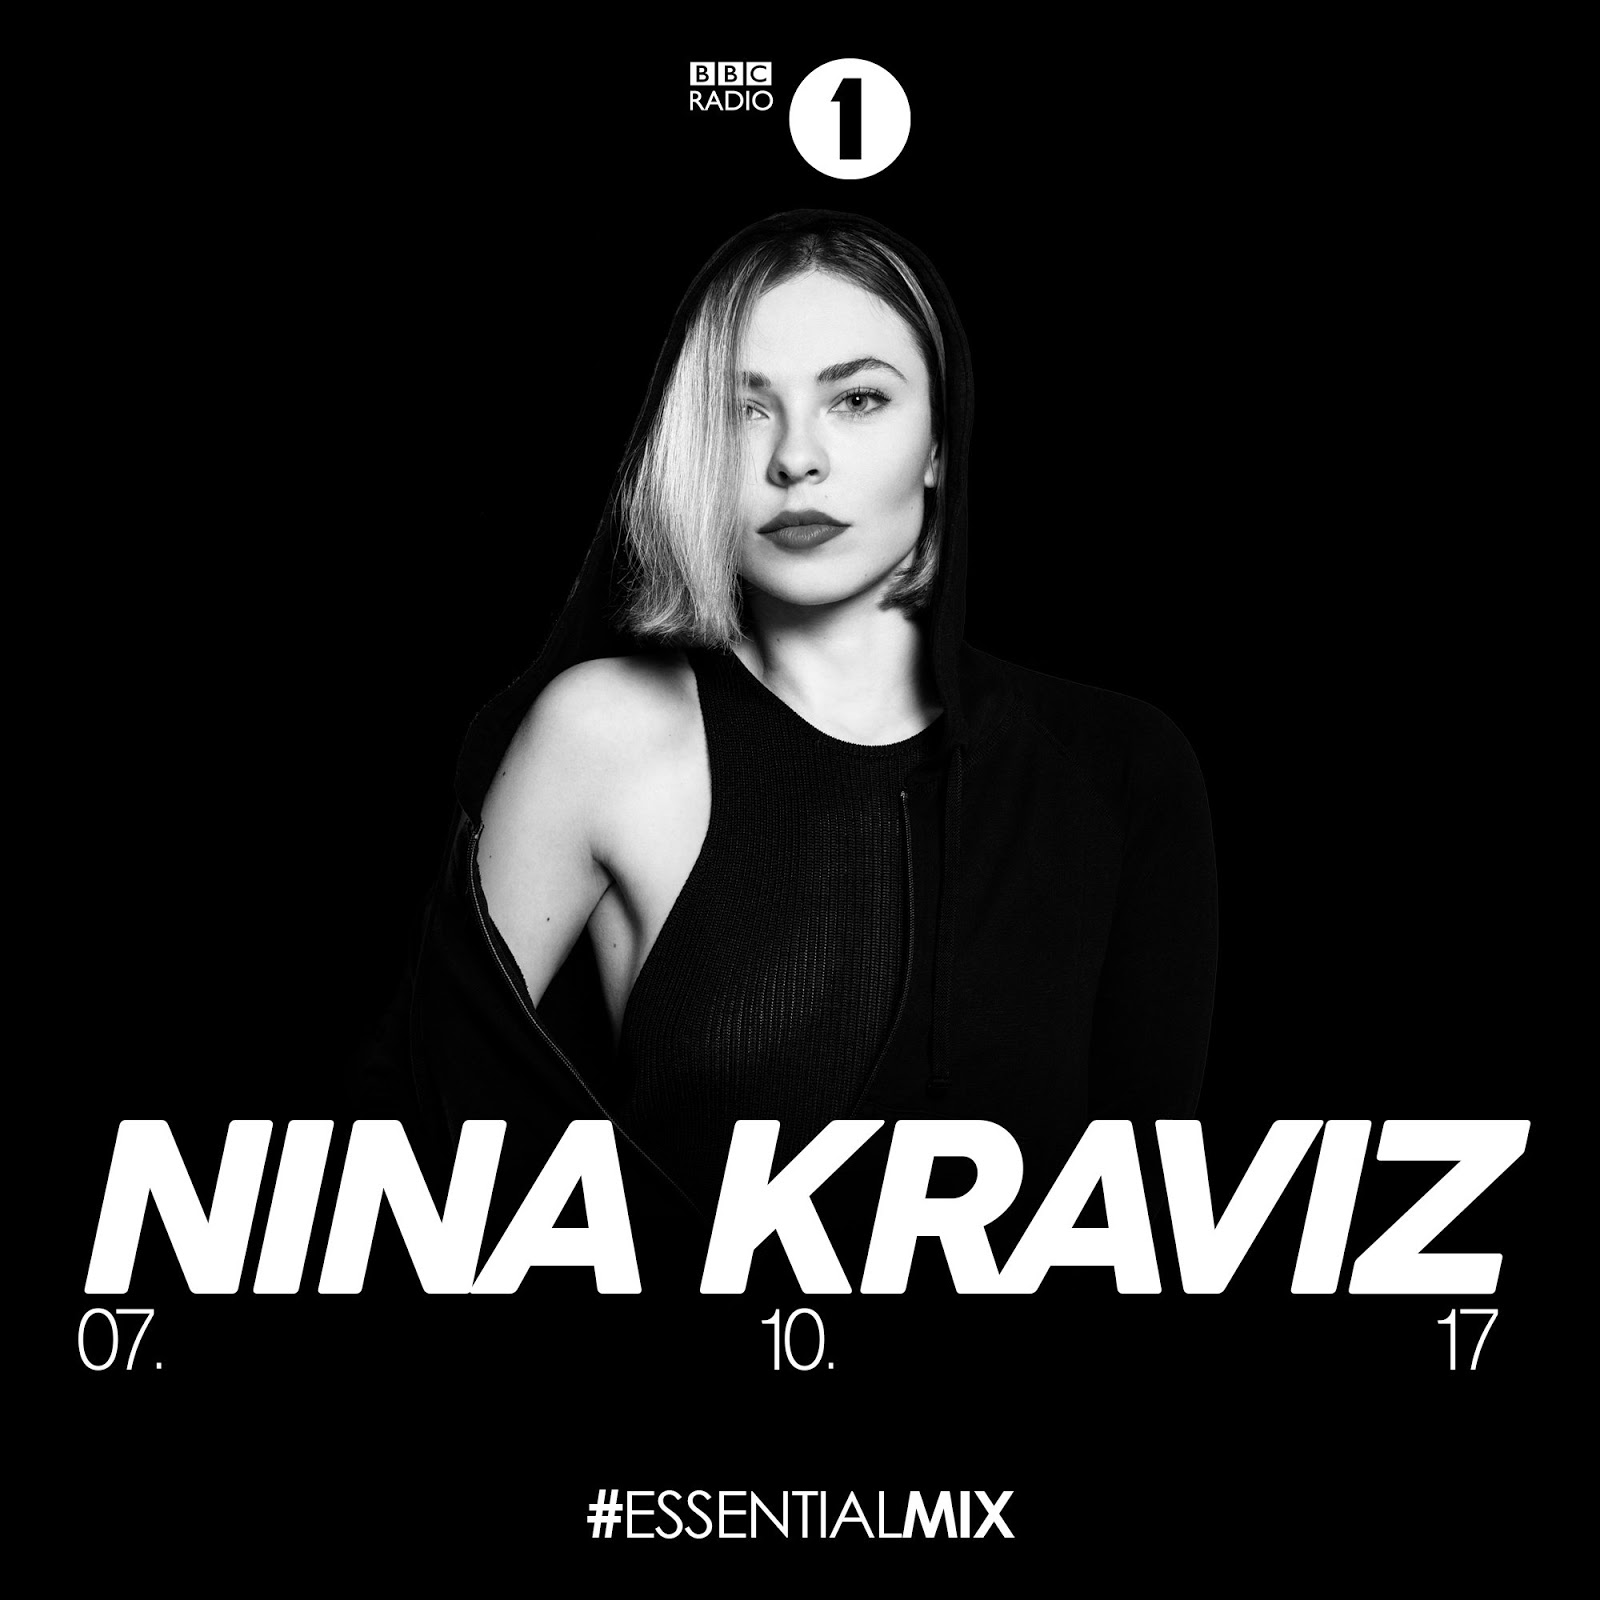 image cover: Nina Kraviz Essential Mix BBC Radio 1 2017